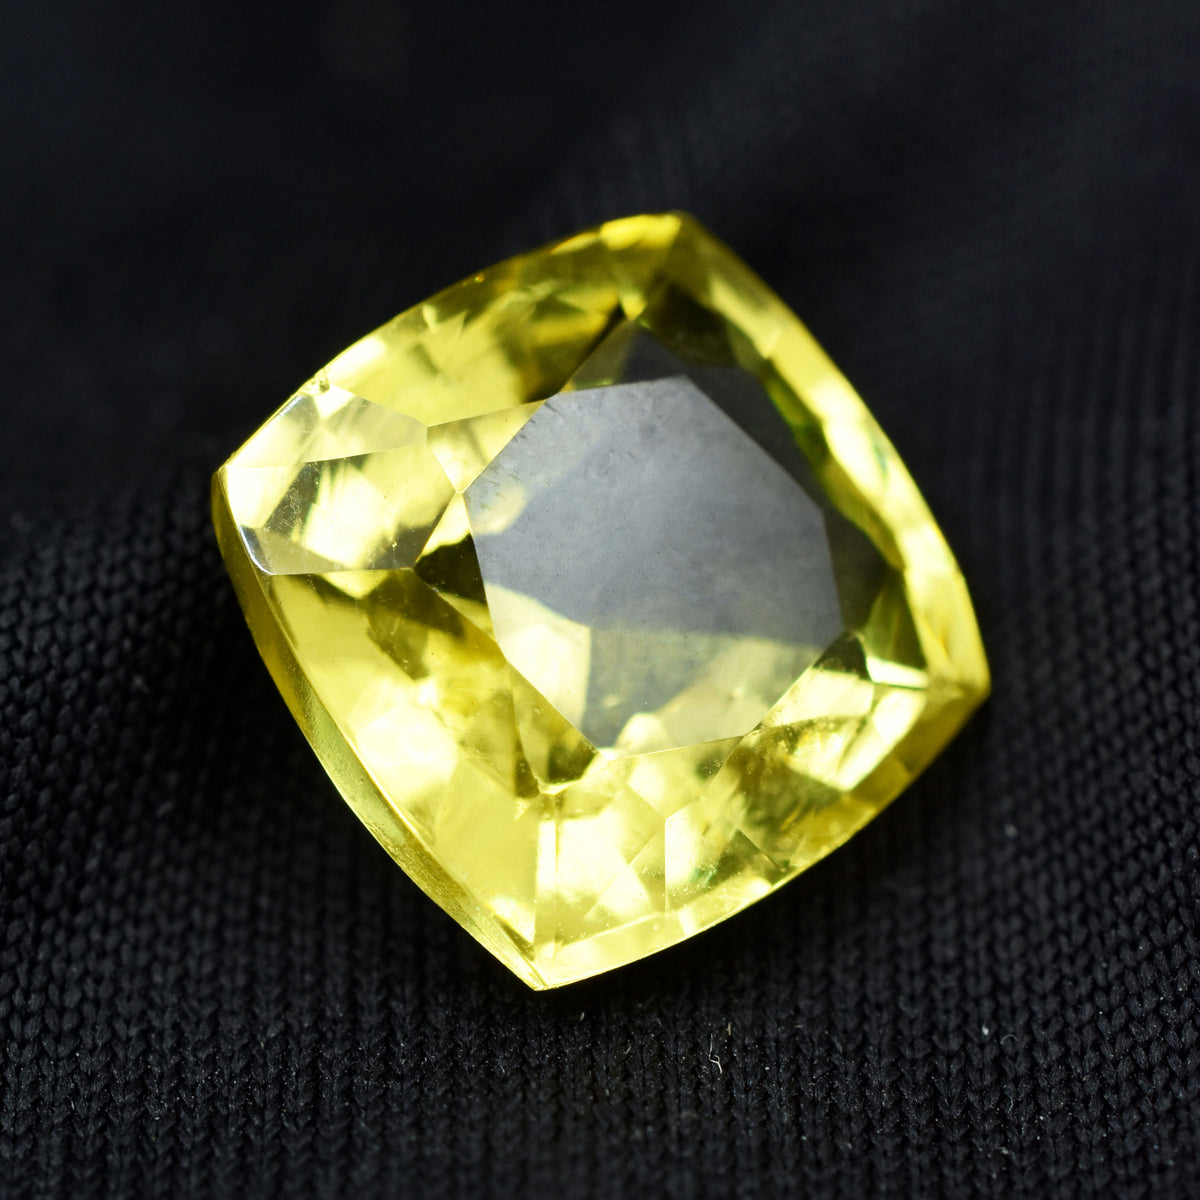 Sri Lanka Sapphire Yellow Square Cushion Cut 10.10 Carat Certified Natural Loose Gemstone Best For Healing Properties